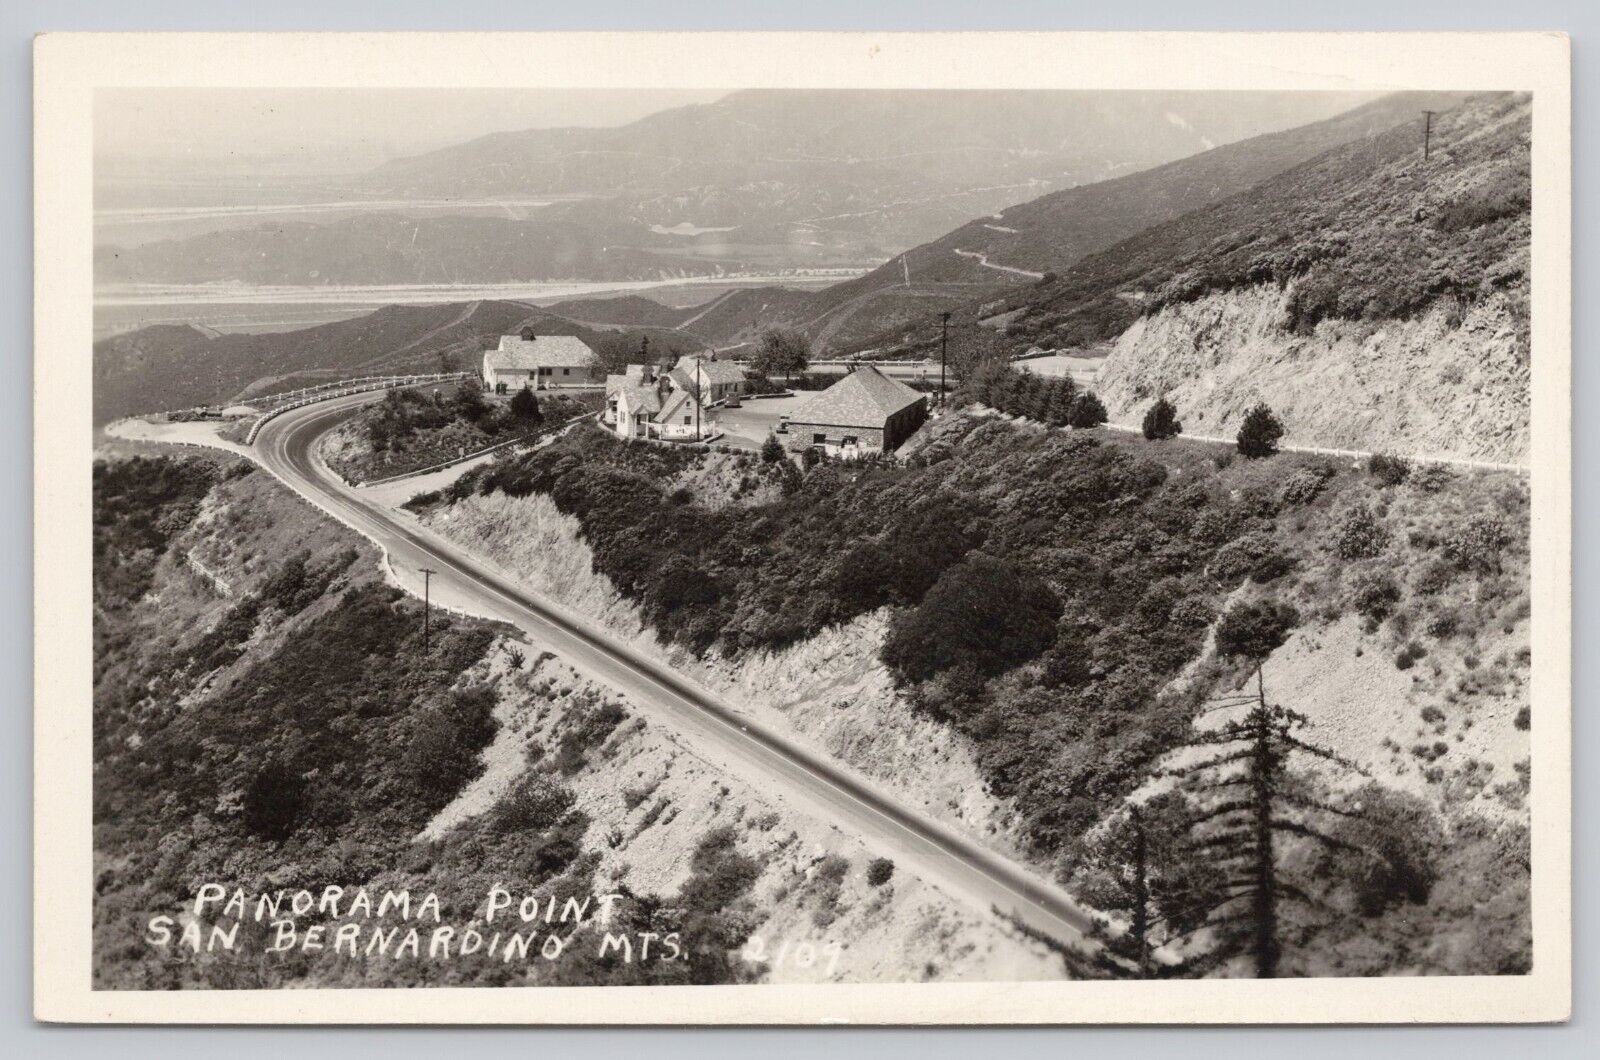 San Bernardino Mountains California, Panorama Point VTG RPPC Real Photo Postcard